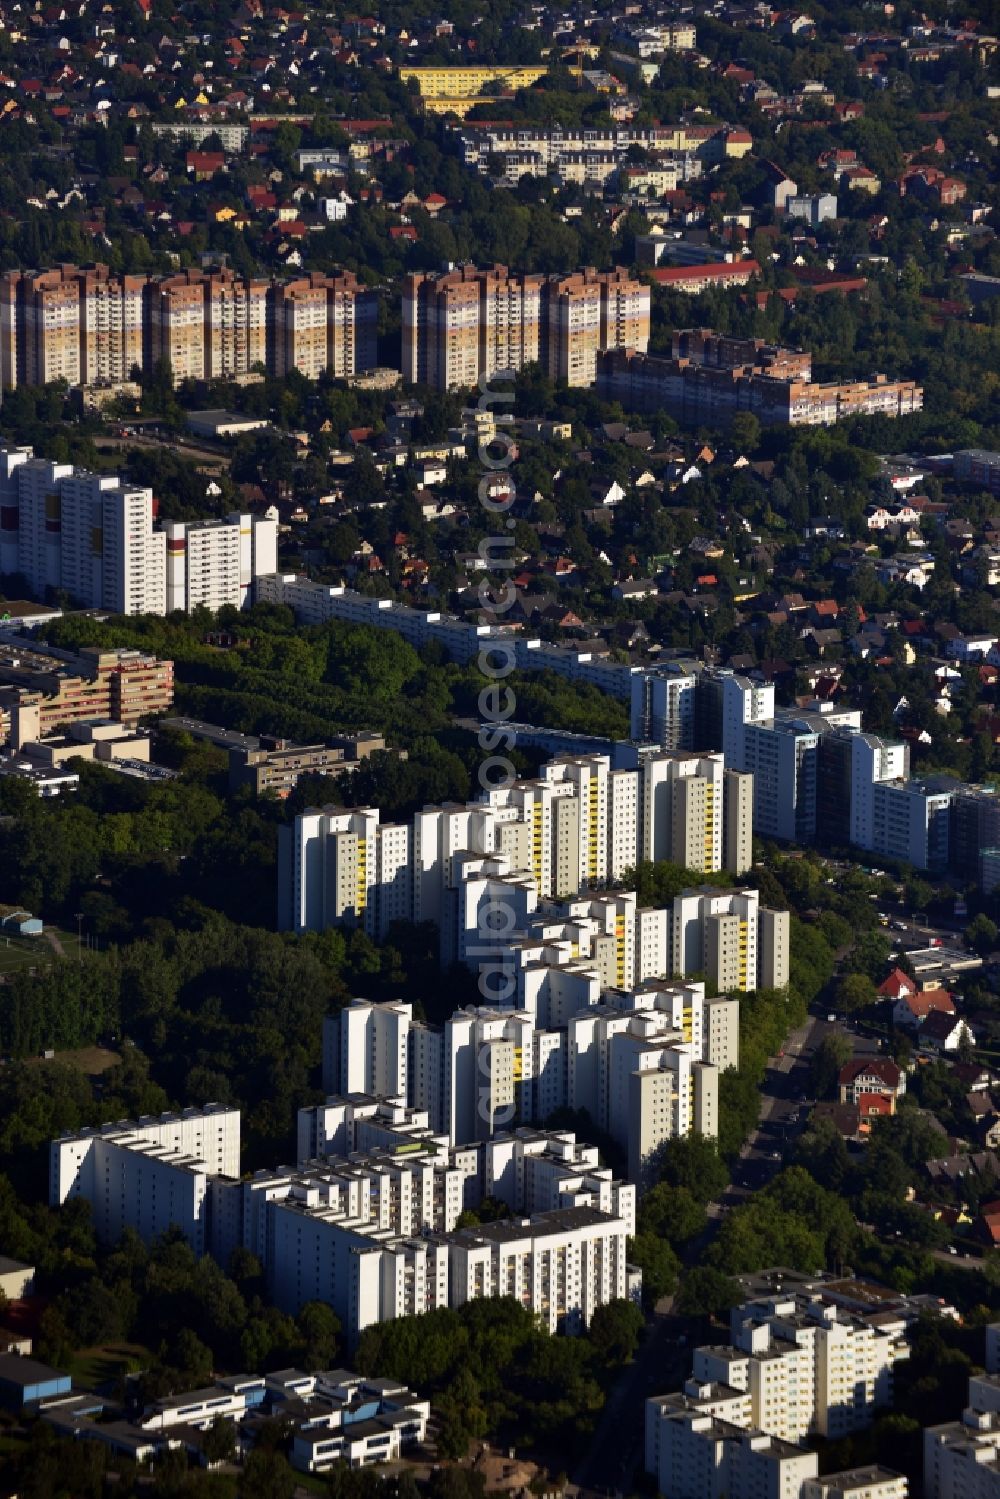 Aerial image Berlin OT Märkisches Viertel - View of apartment buildings in the housing complex of Maerkisches Viertel in Berlin